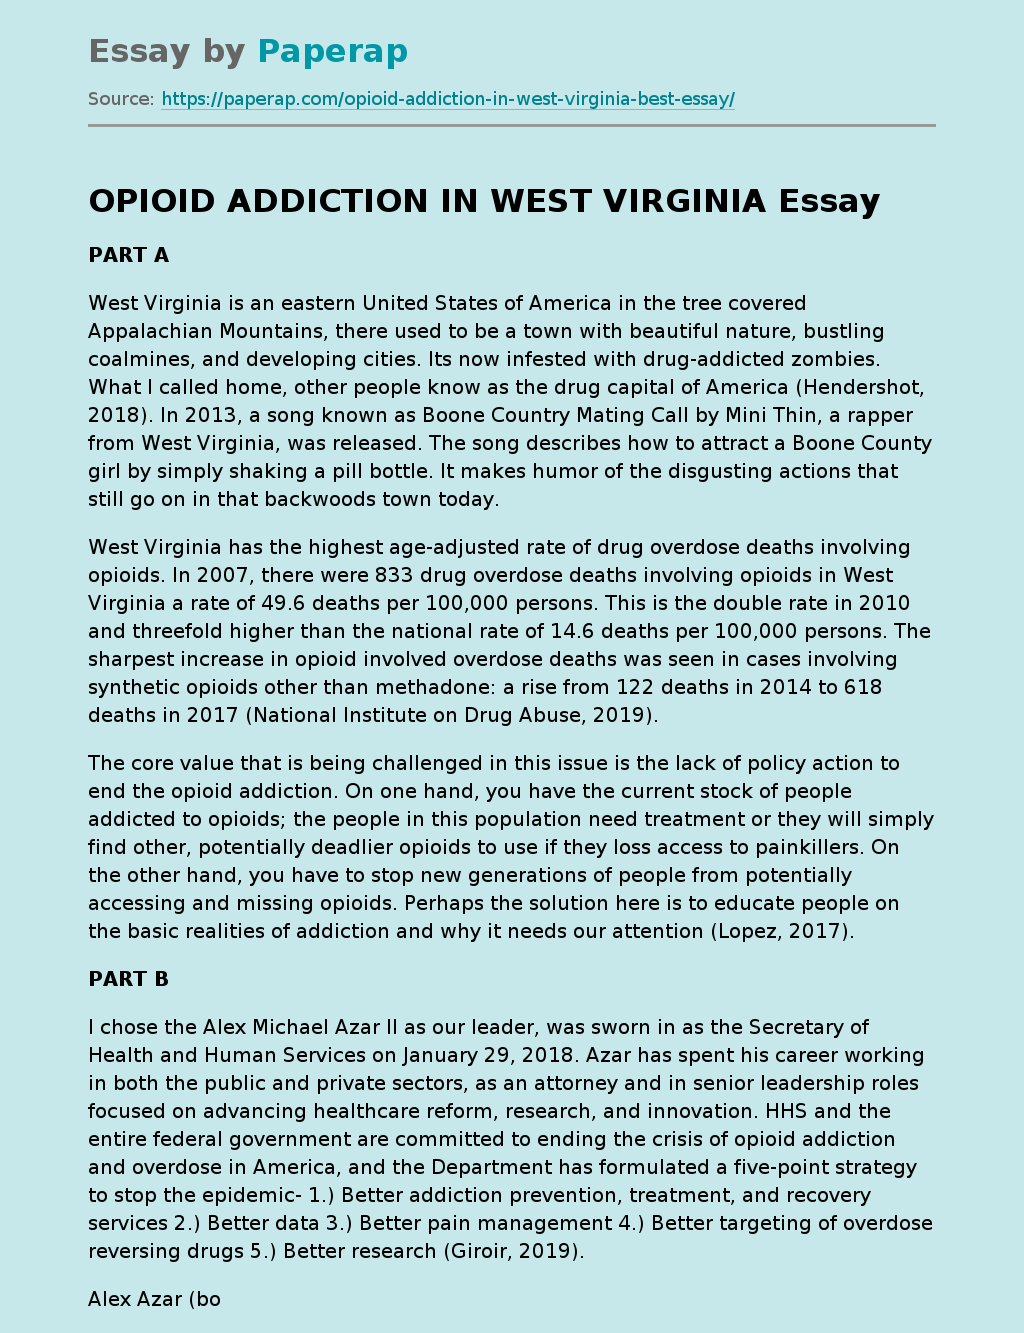 OPIOID ADDICTION IN WEST VIRGINIA